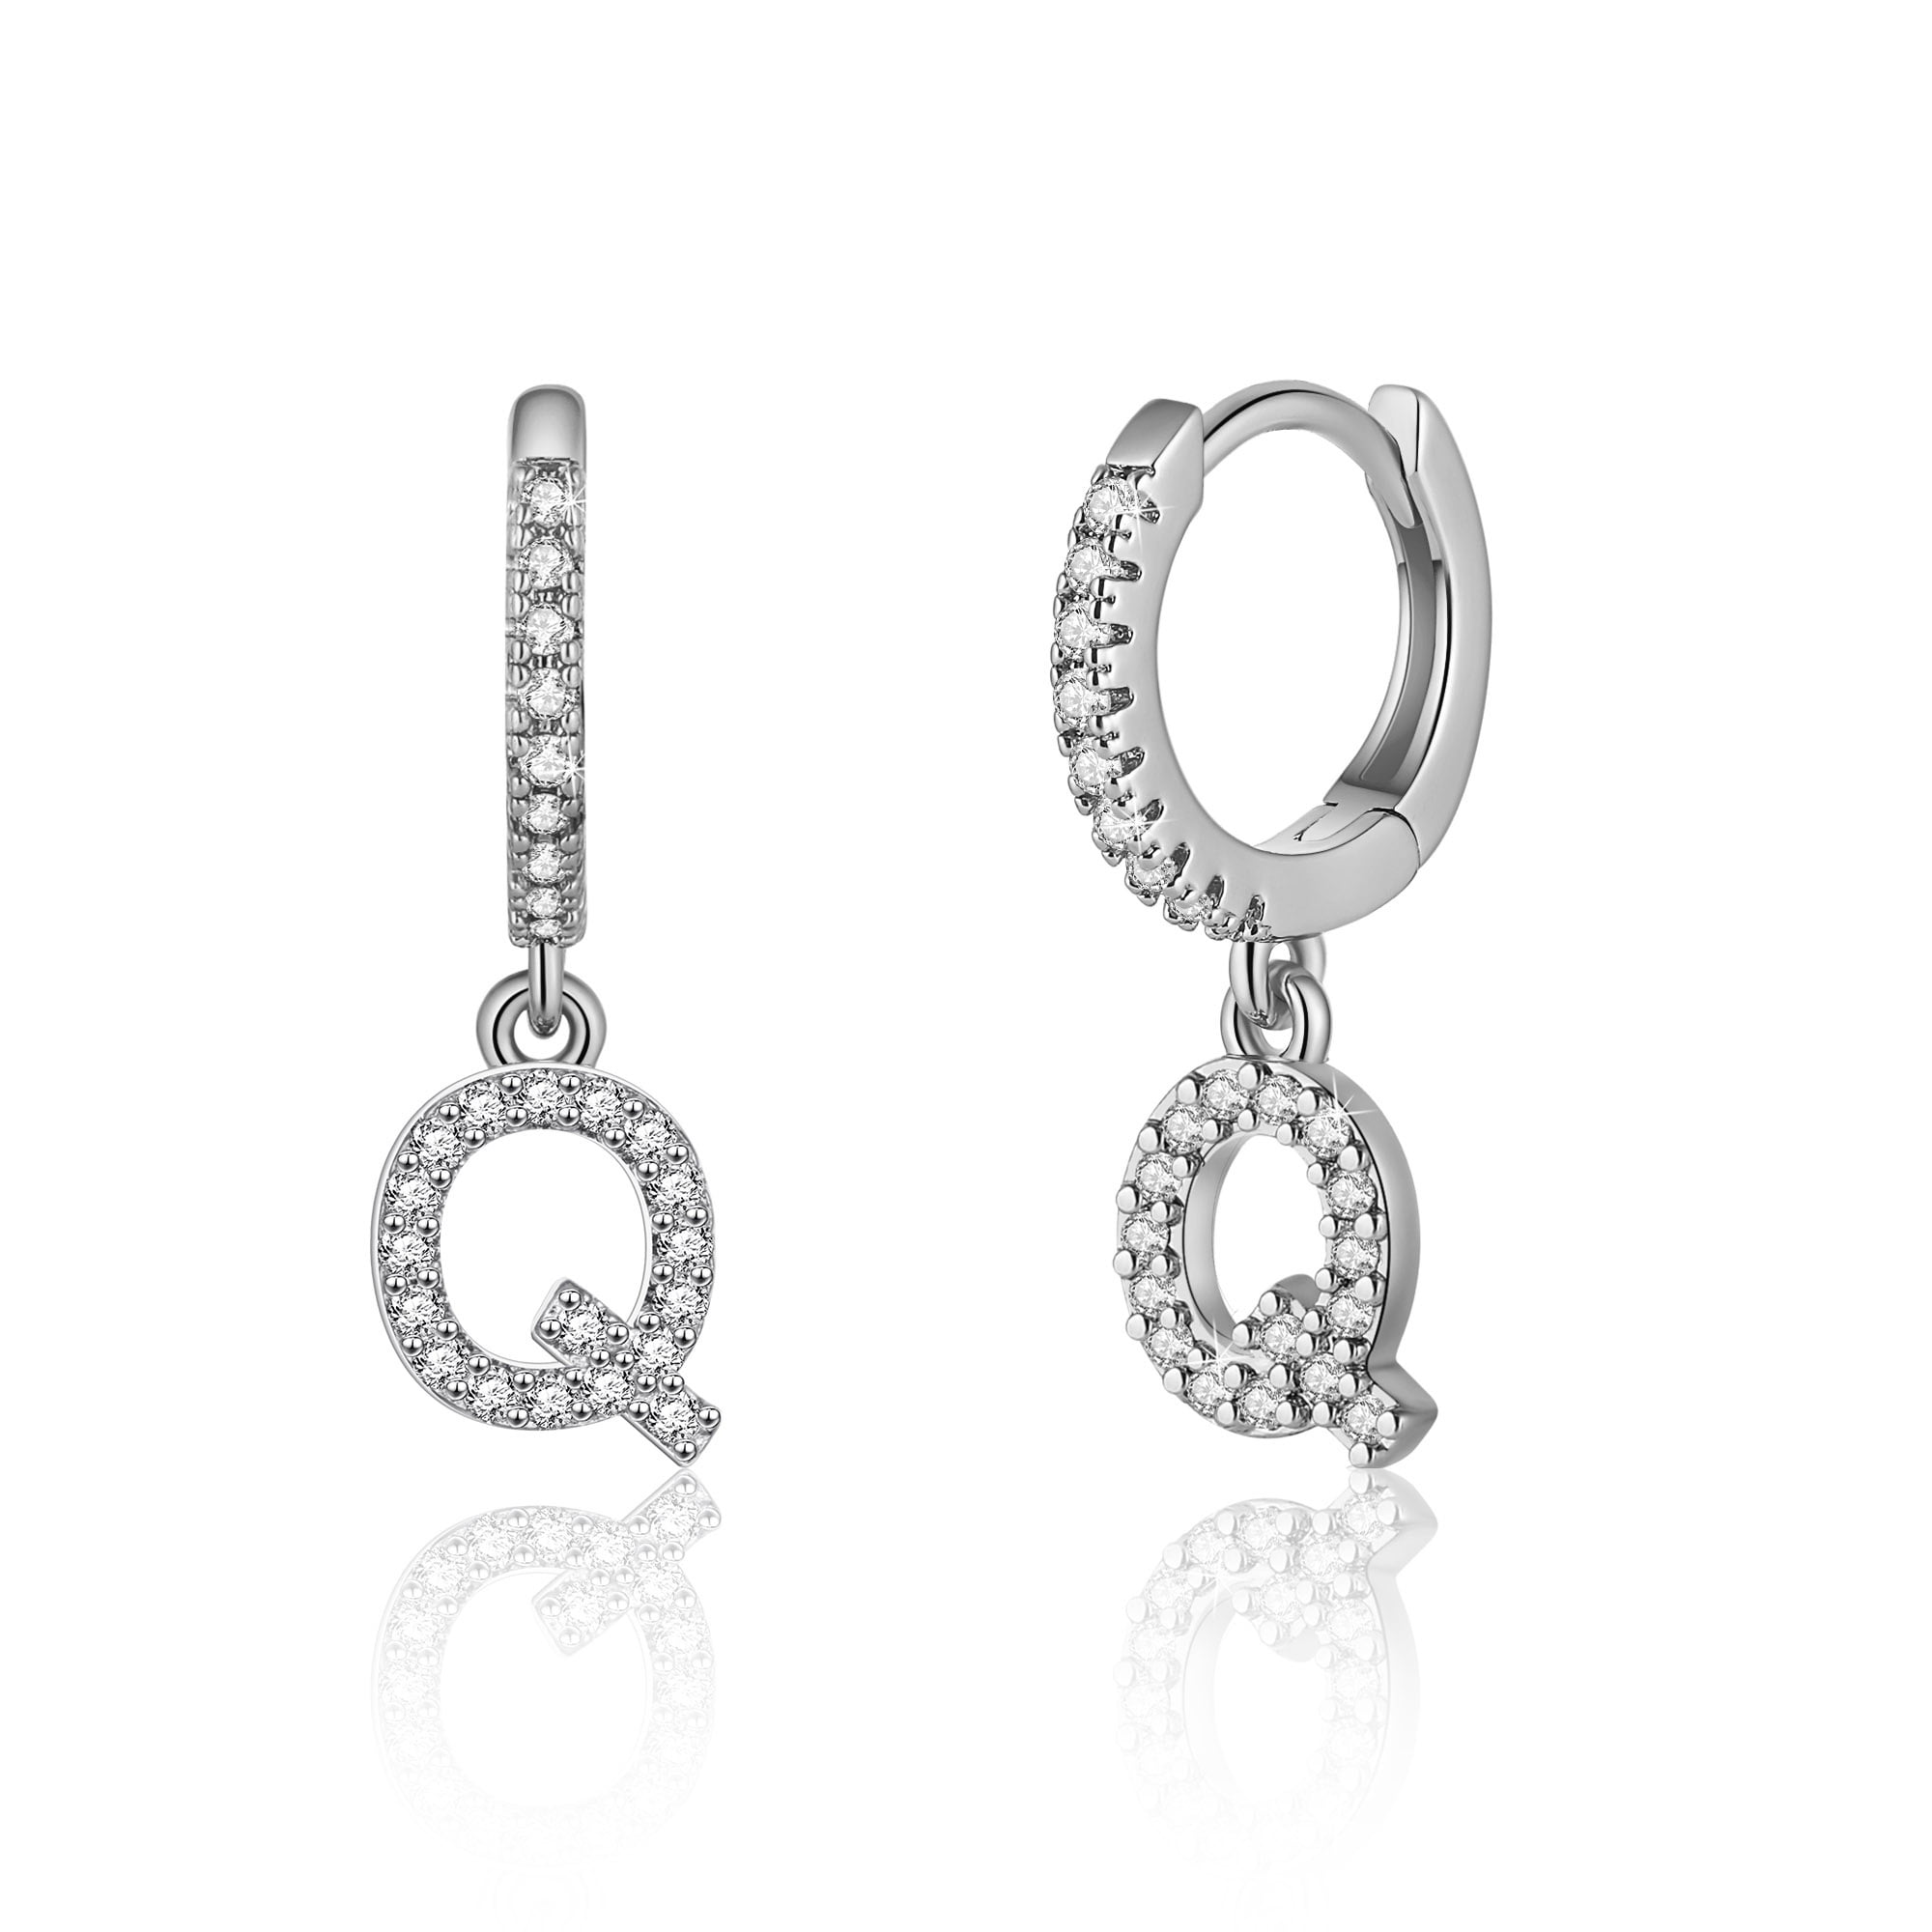 AOBOCO S925 Sterling Silver Cubic Zirconia Huggie Small Hoop Earrings for Women Girls Teens